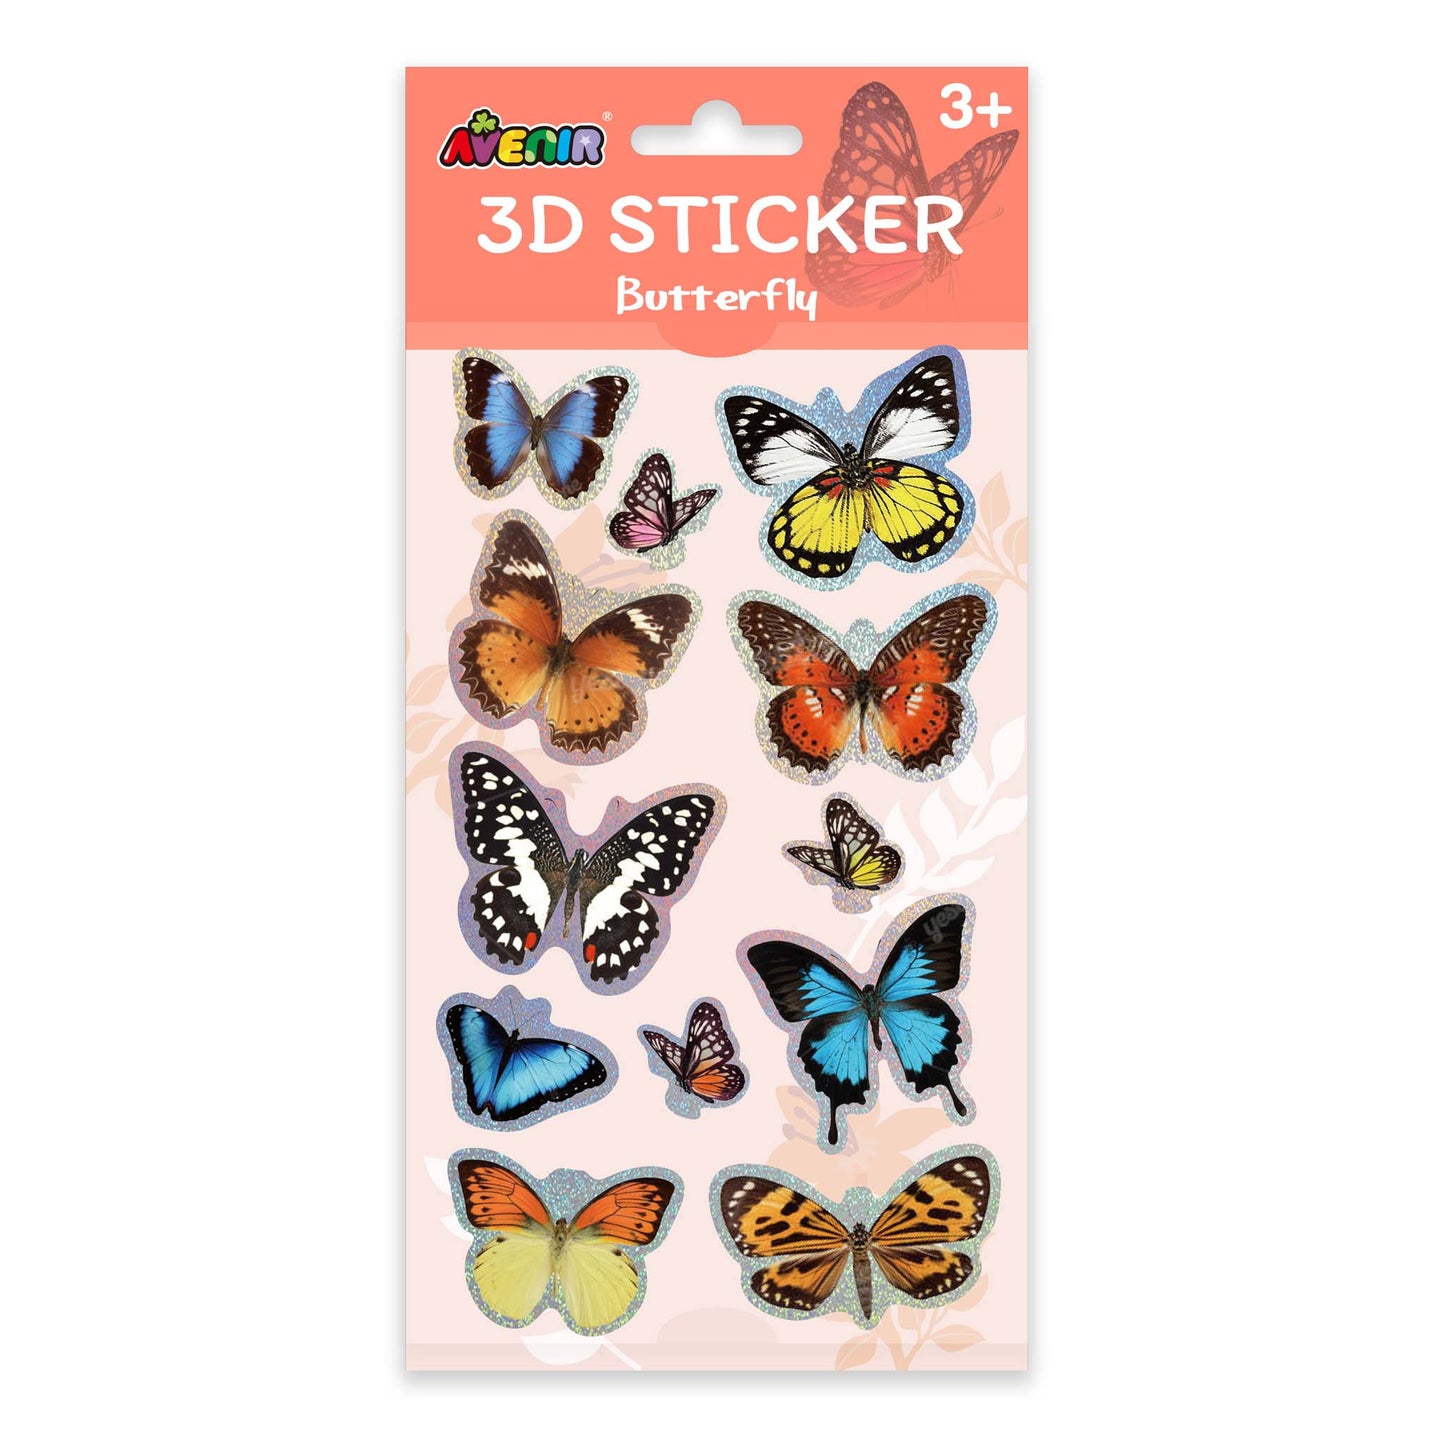 3D Sticker Butterfly